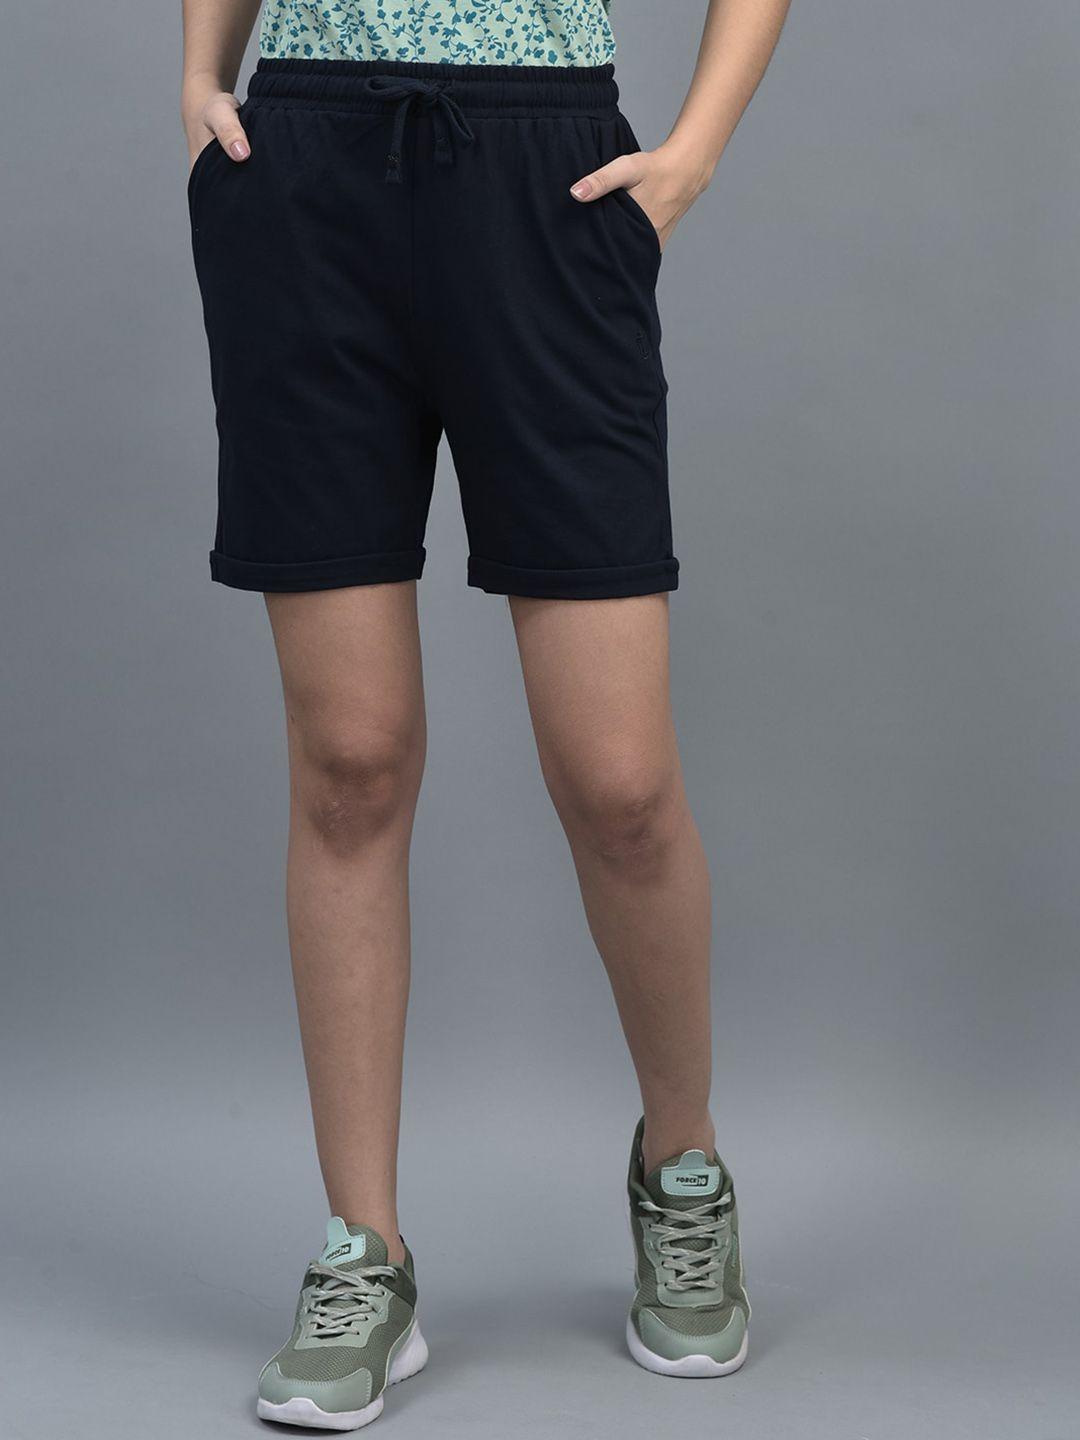 dollar missy women slim fit antimicrobial cotton training sports shorts